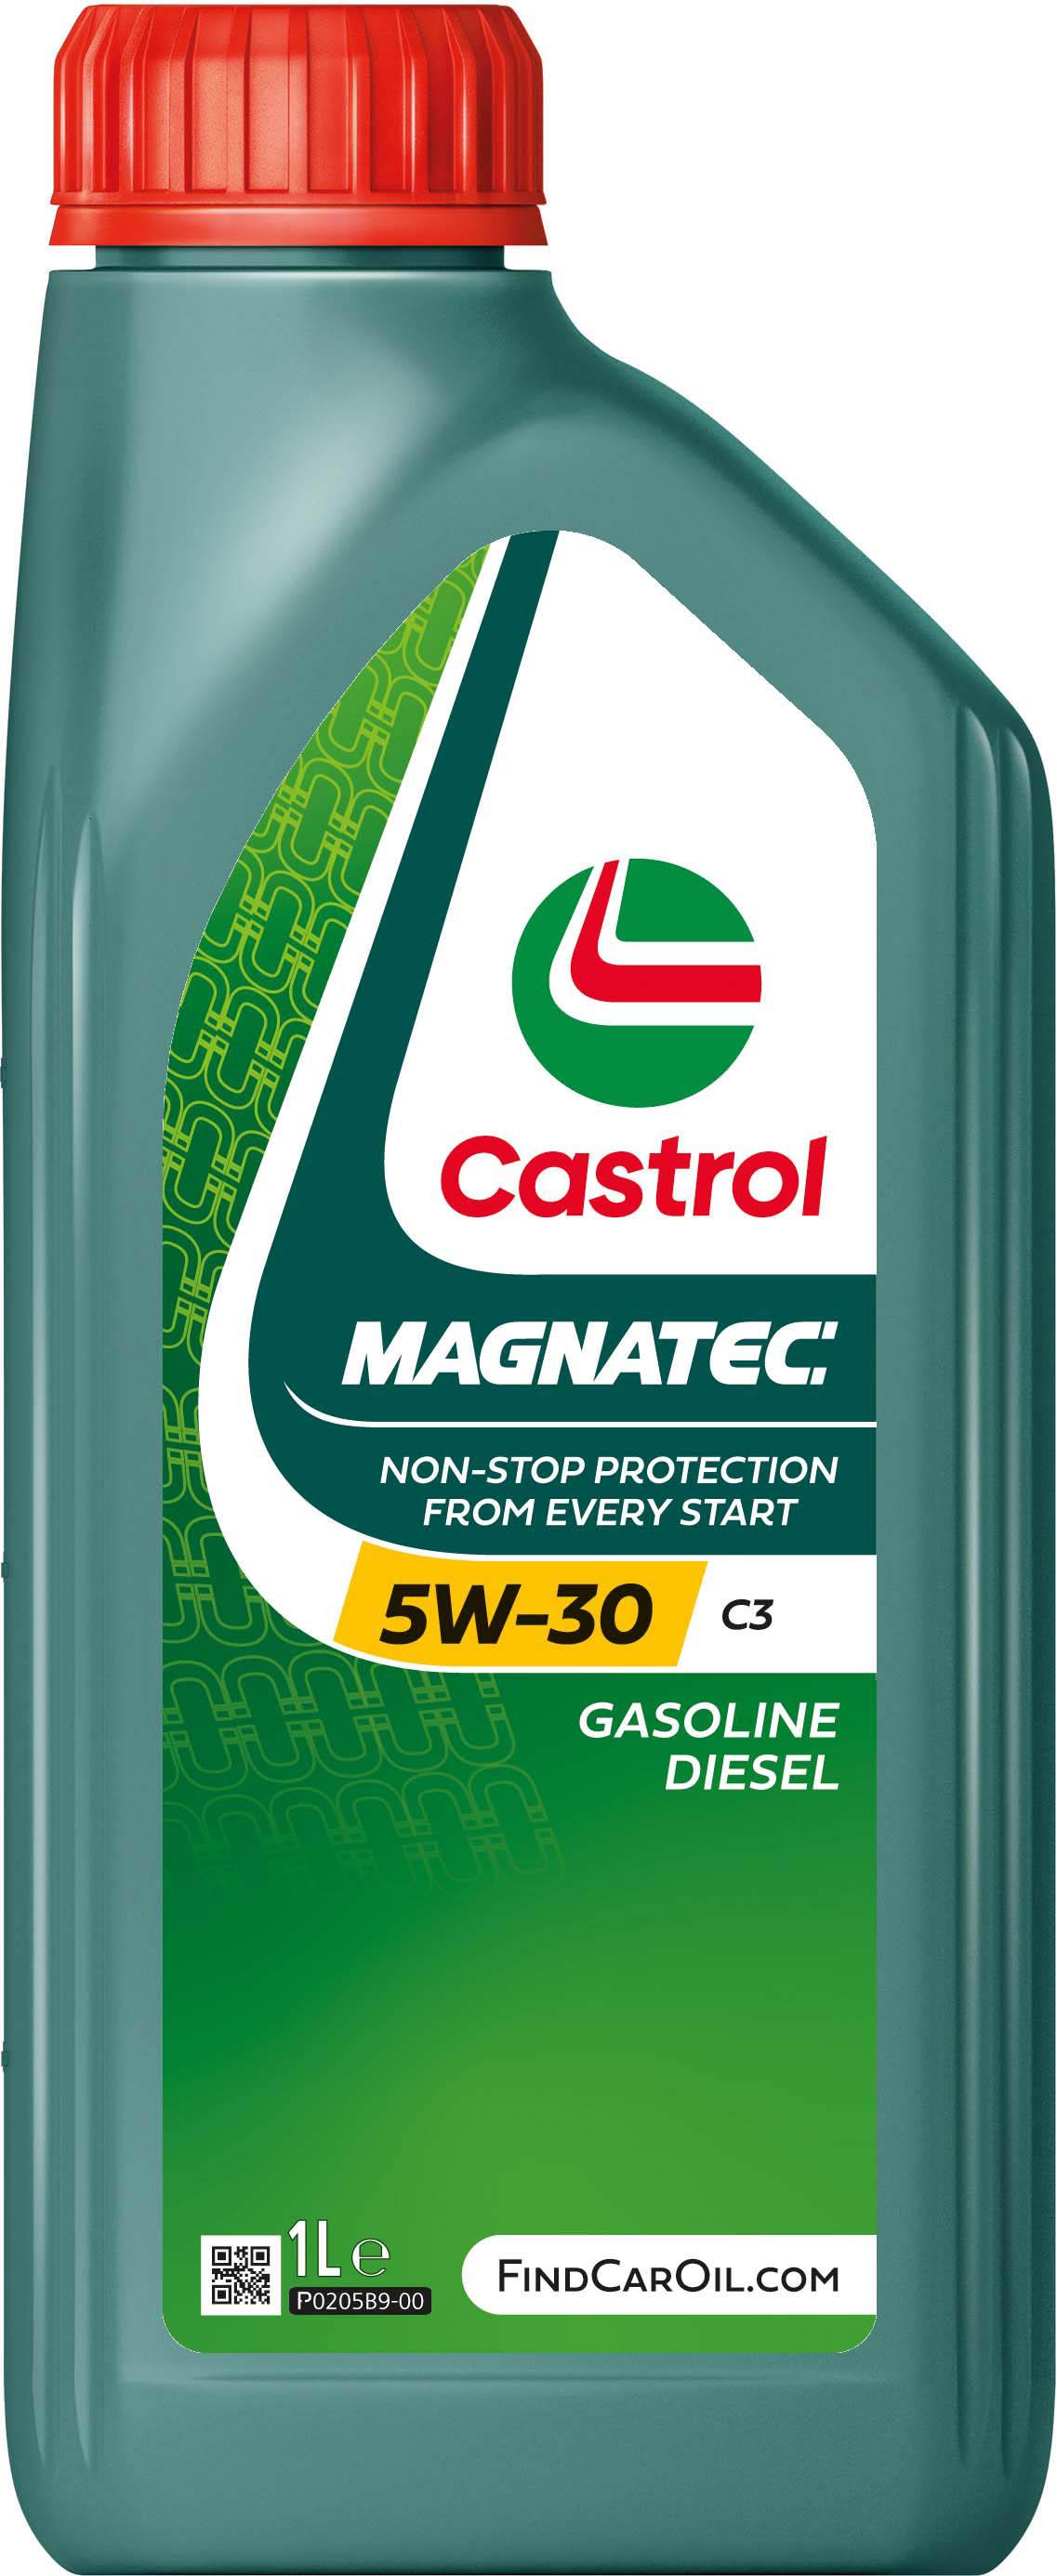 Castrol Magnatec 5W-30 Oil Vauxhall 1 Ltr